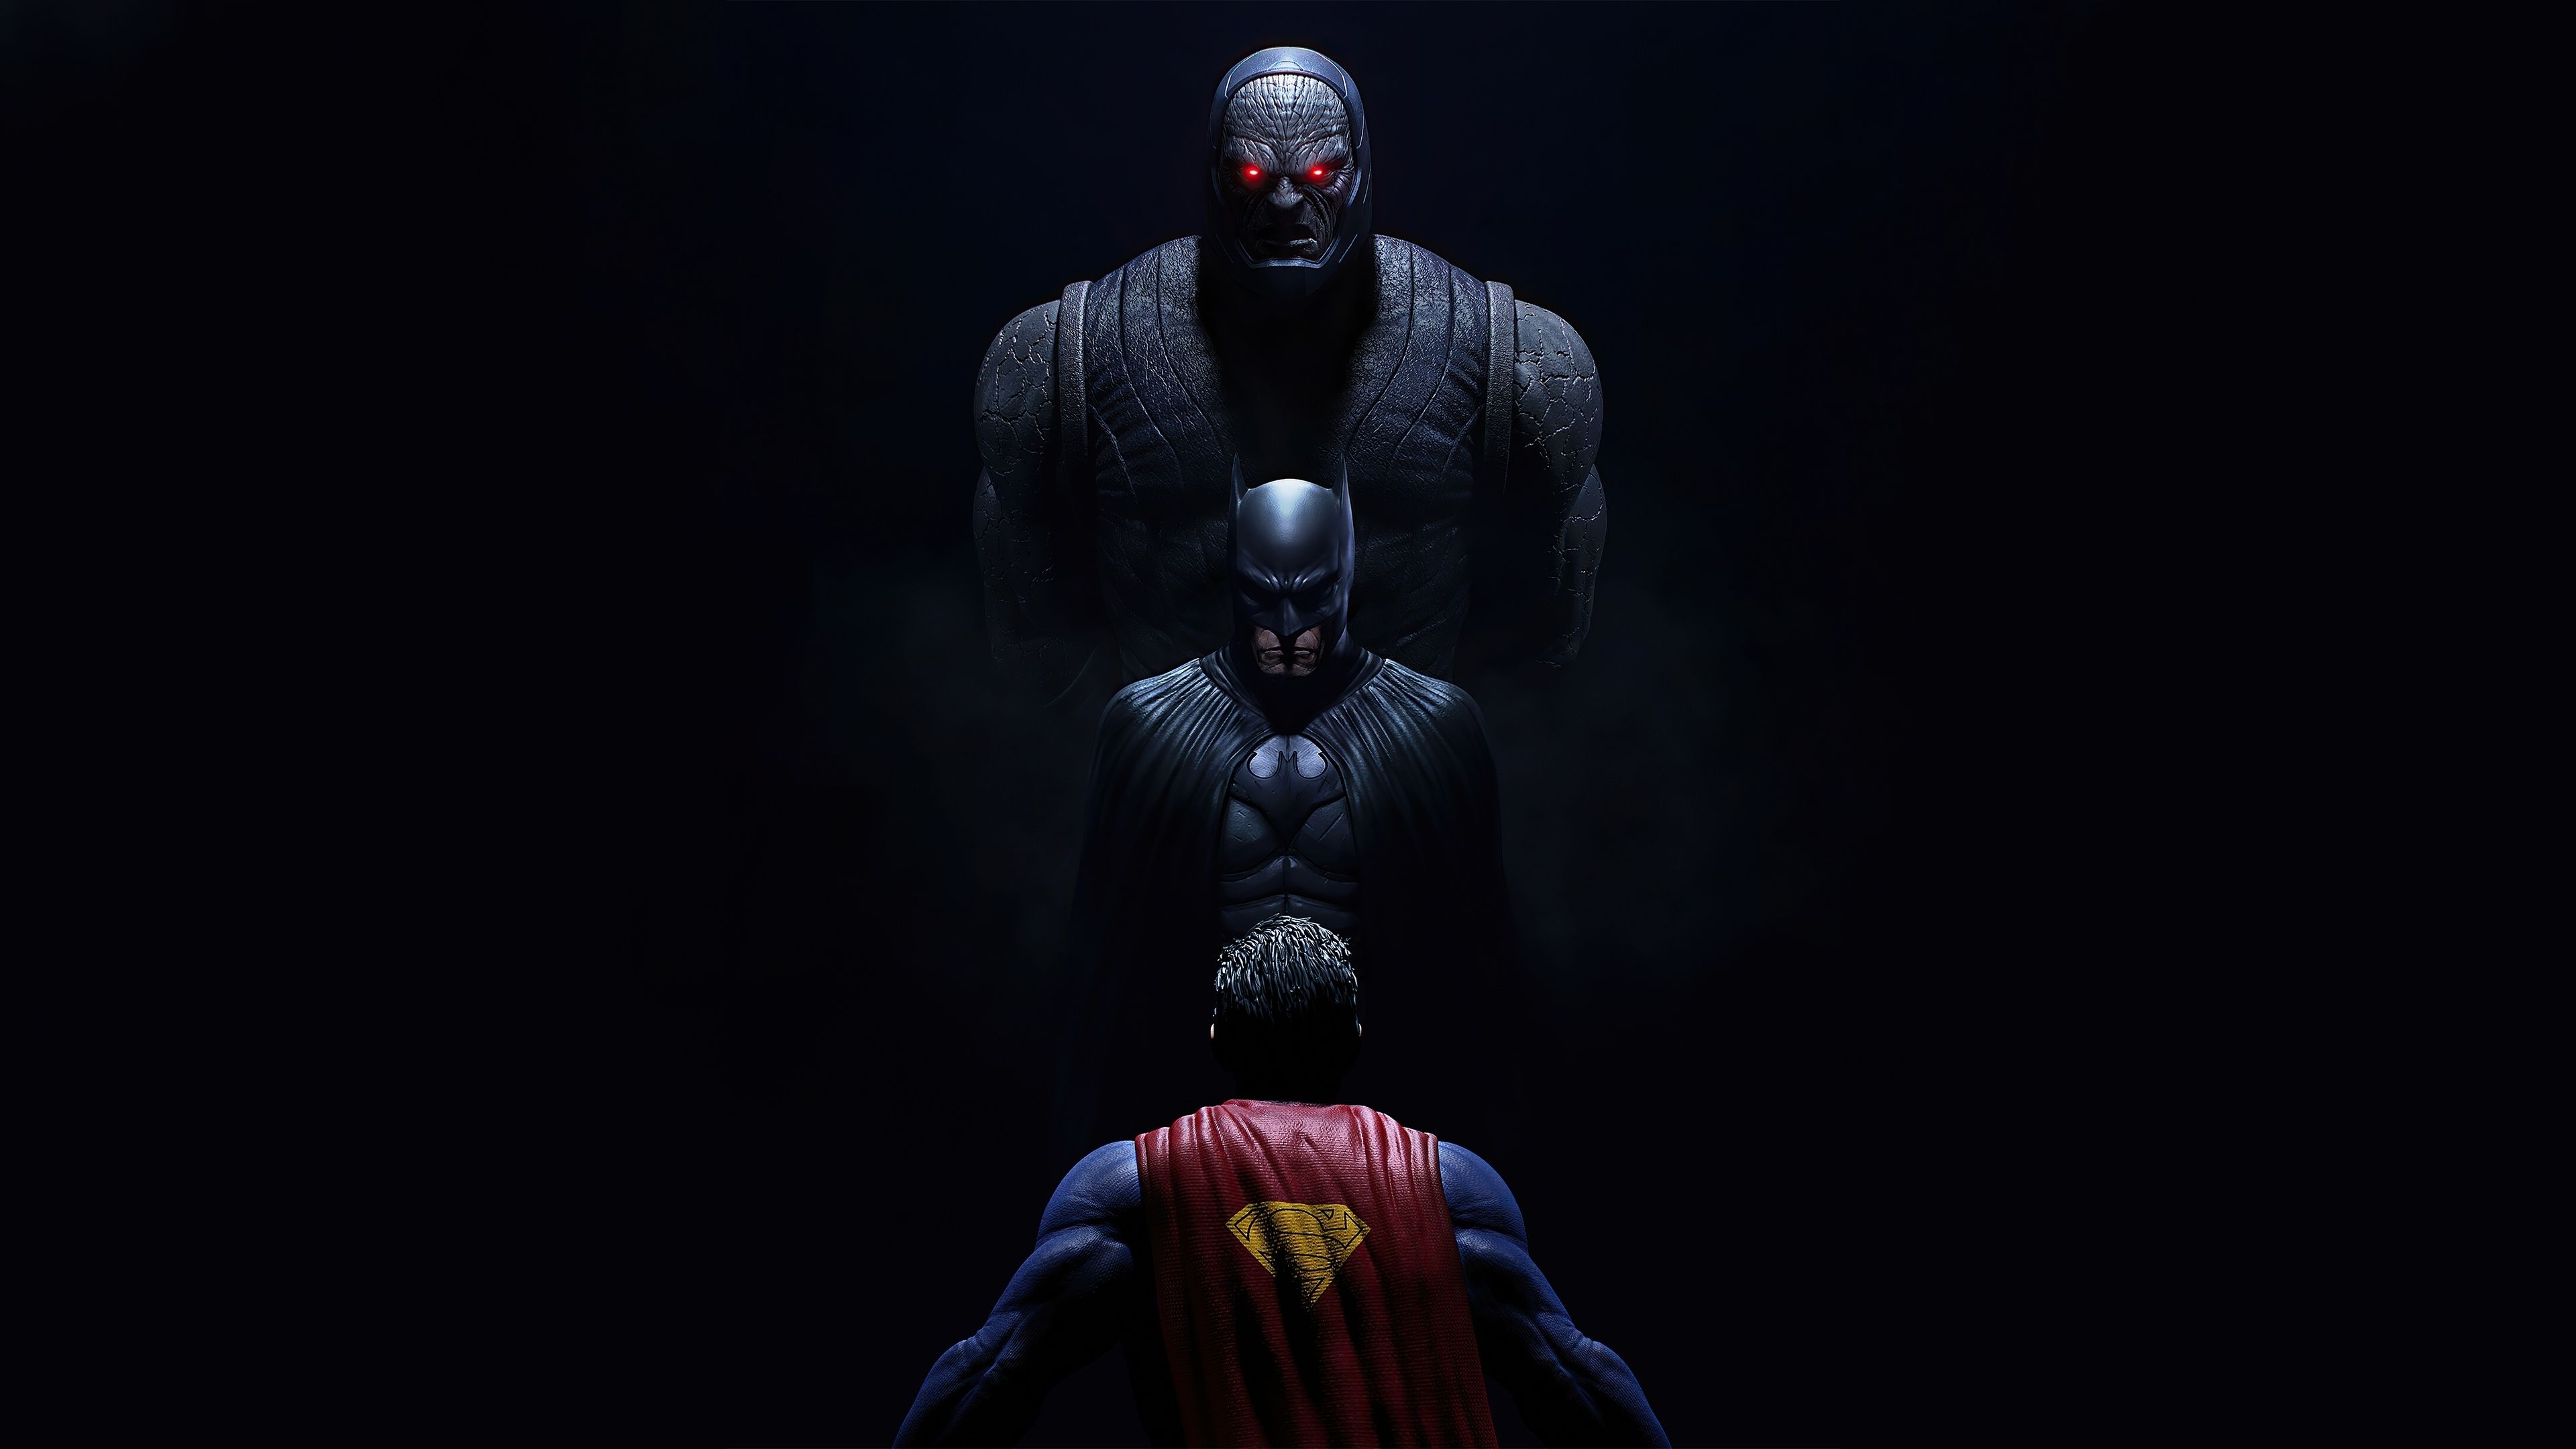 Download 3840x2160 wallpaper darkseid & batman vs superman, dark, 4k, uhd 16: widescreen, 3840x2160 HD image, background, 24986